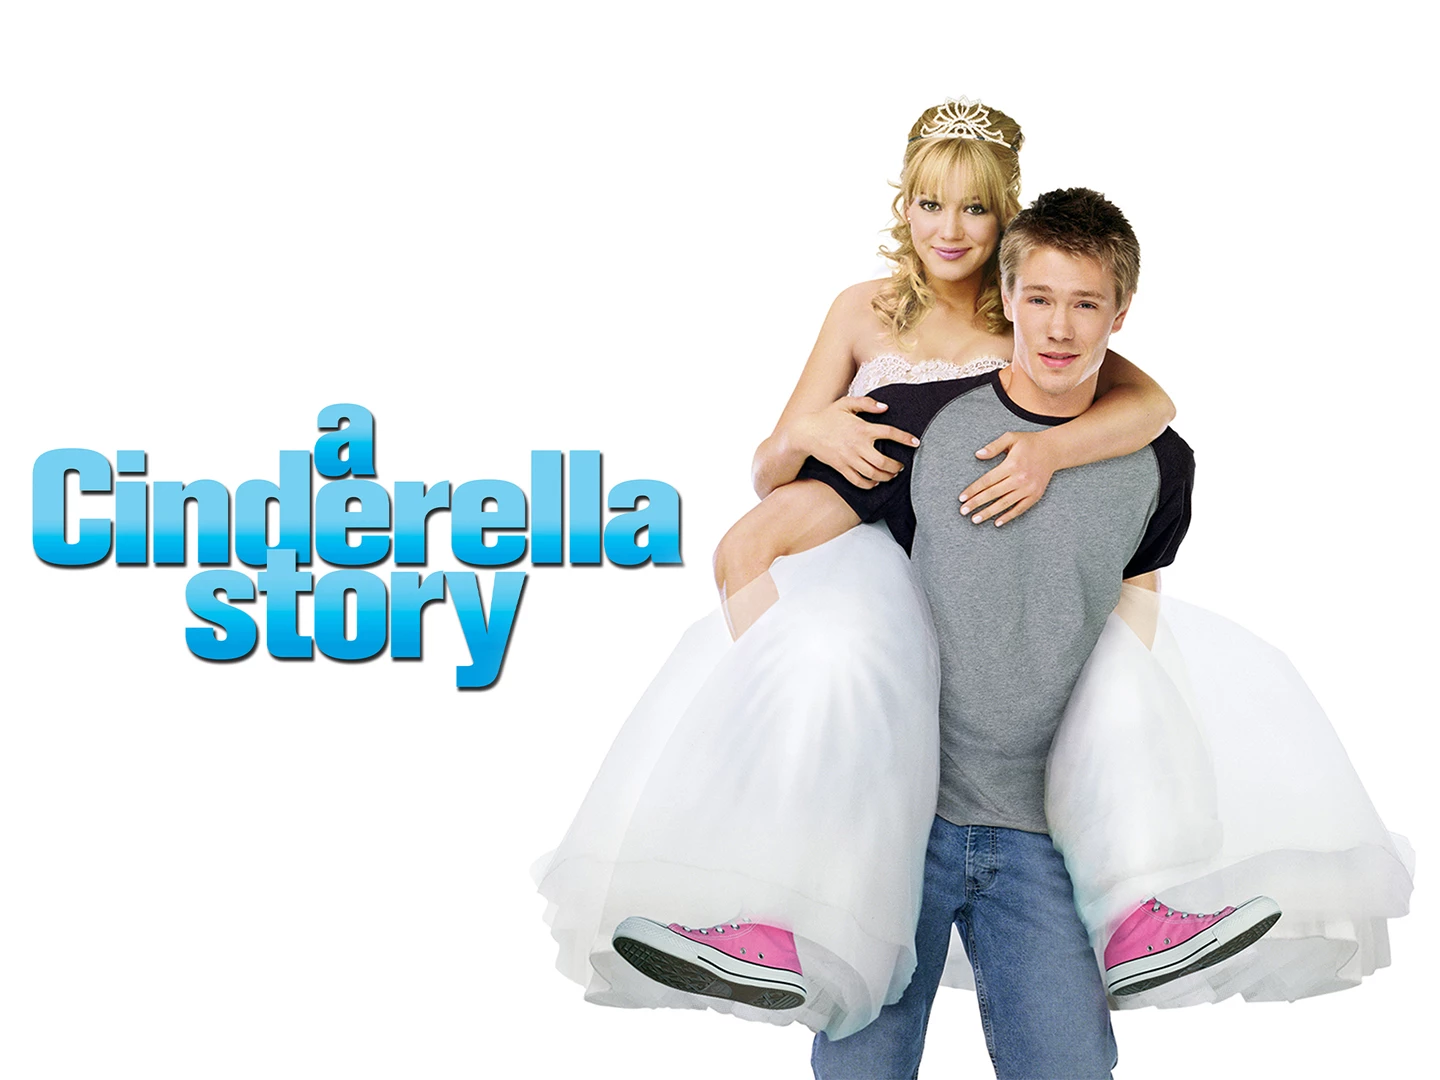 movies like Princess Diaries - "A Cinderella Story" (2004)